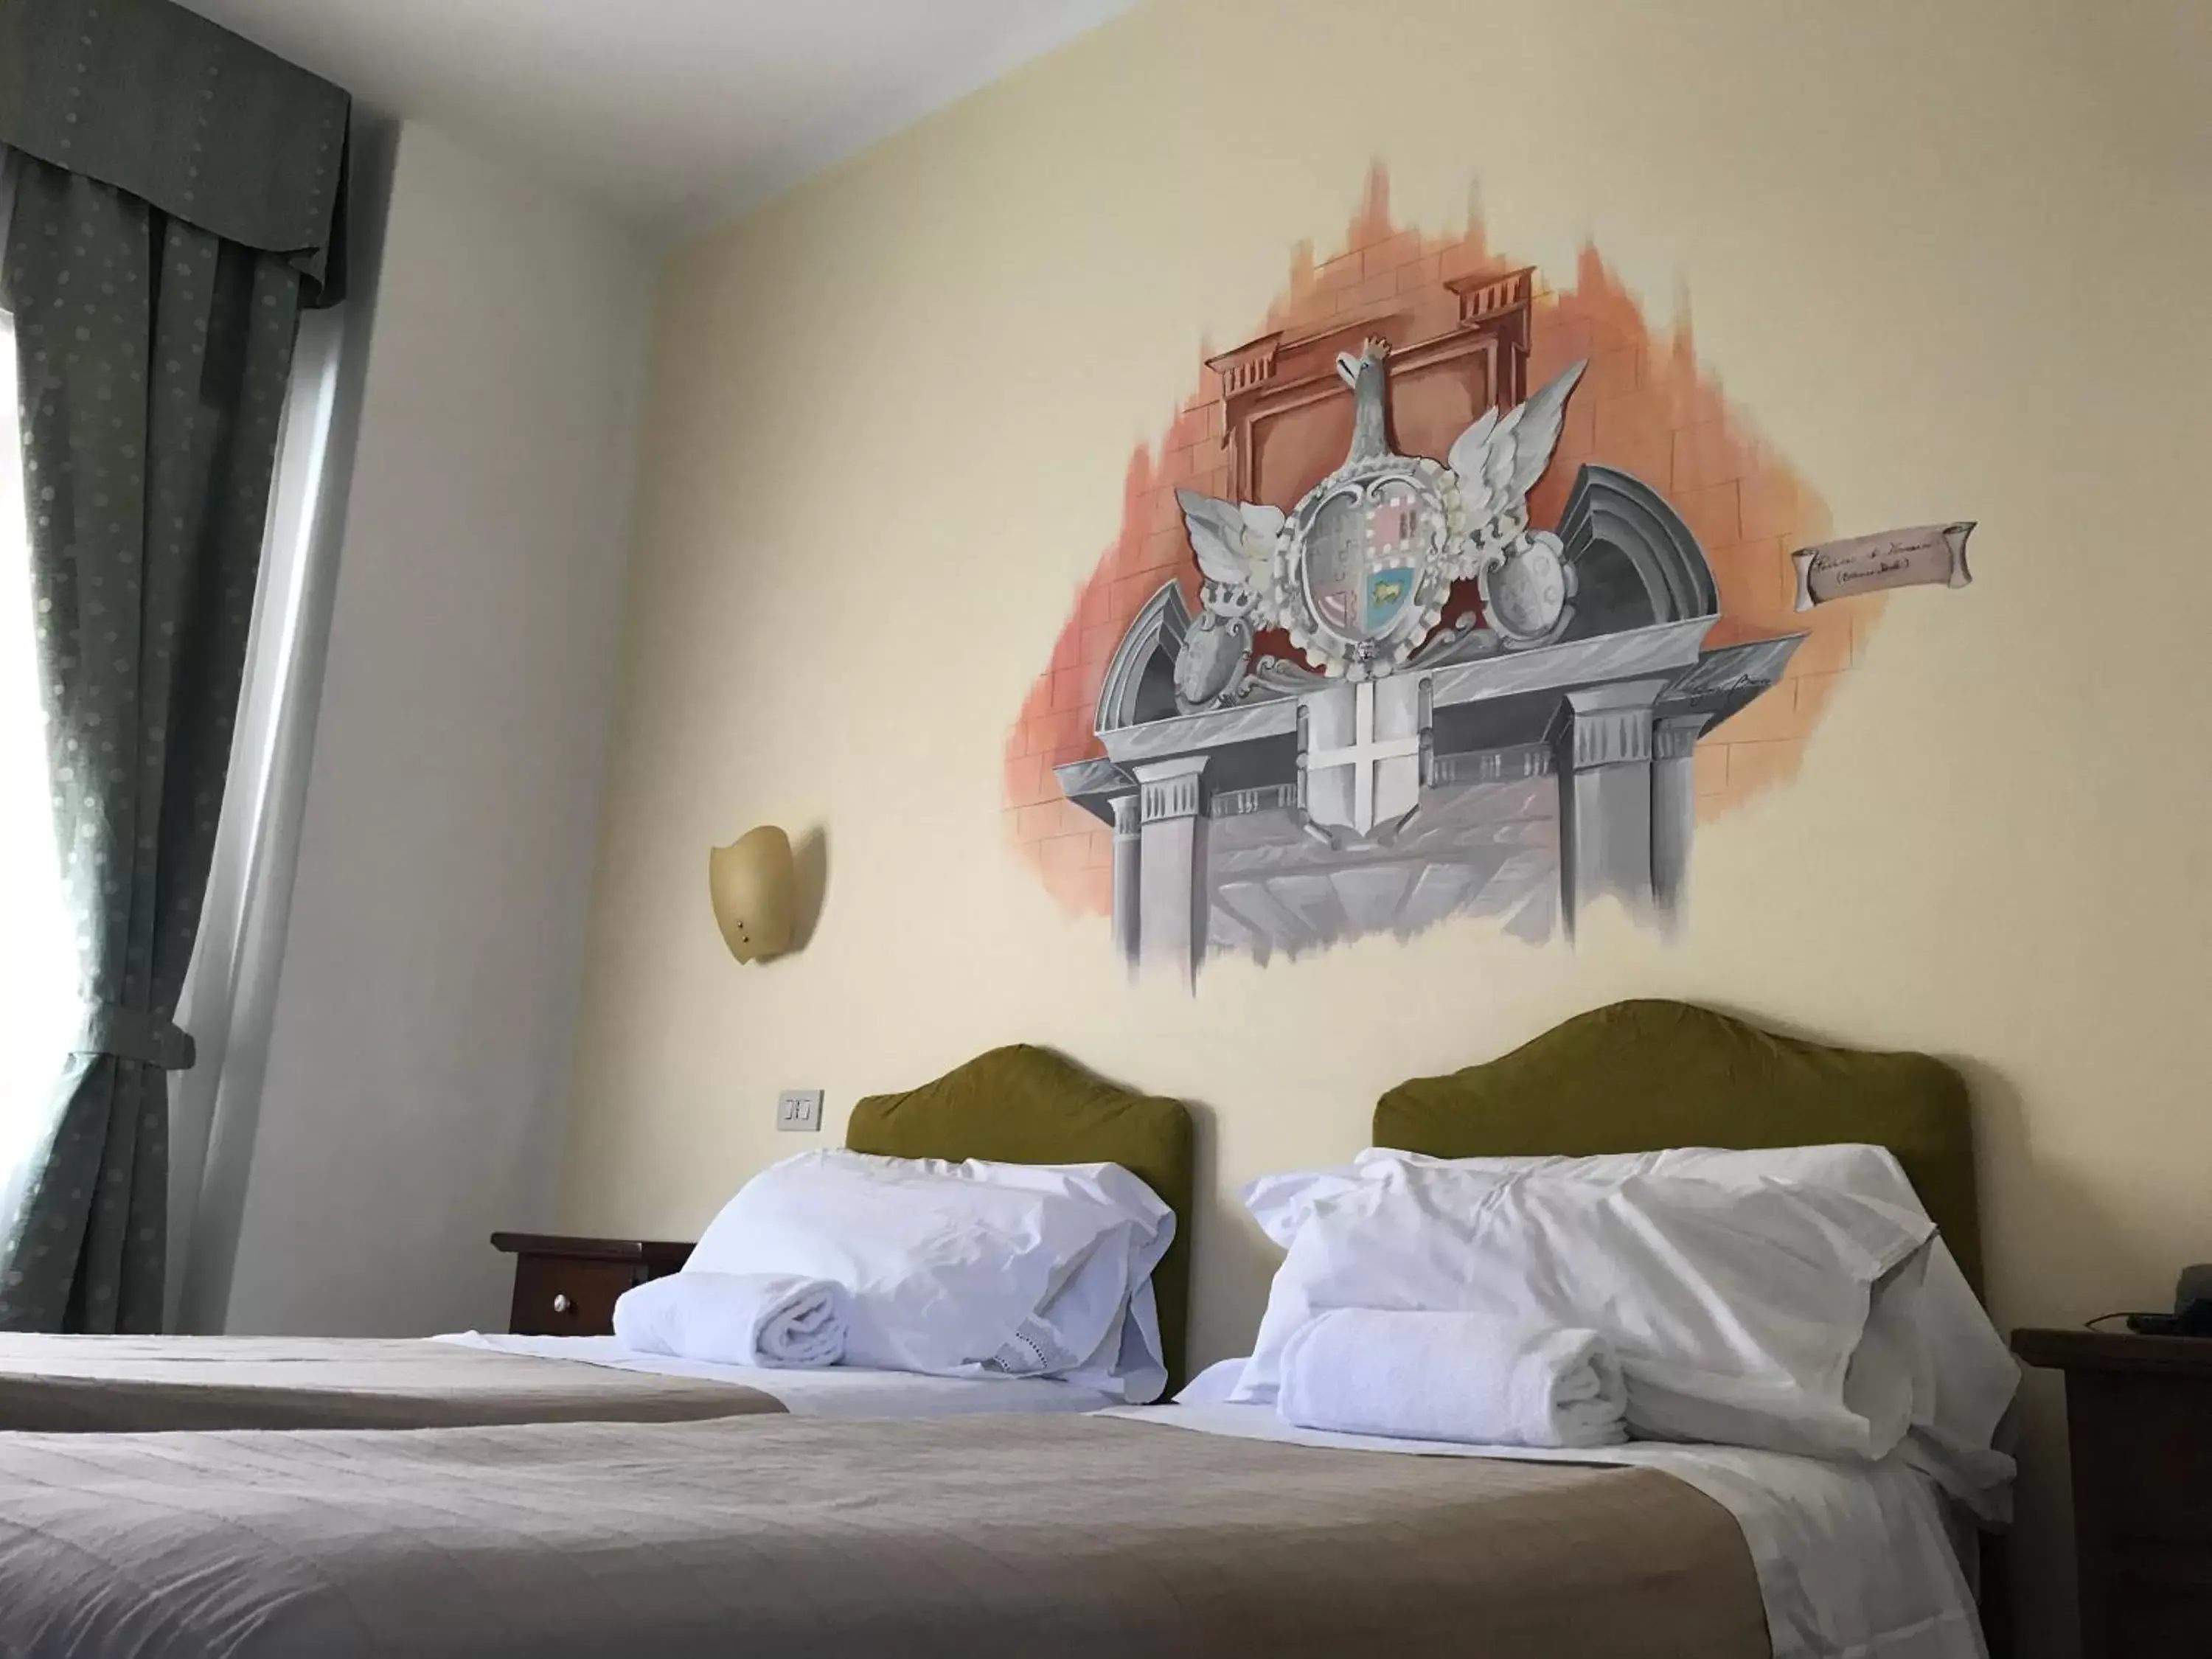 Bed in Hotel Elite